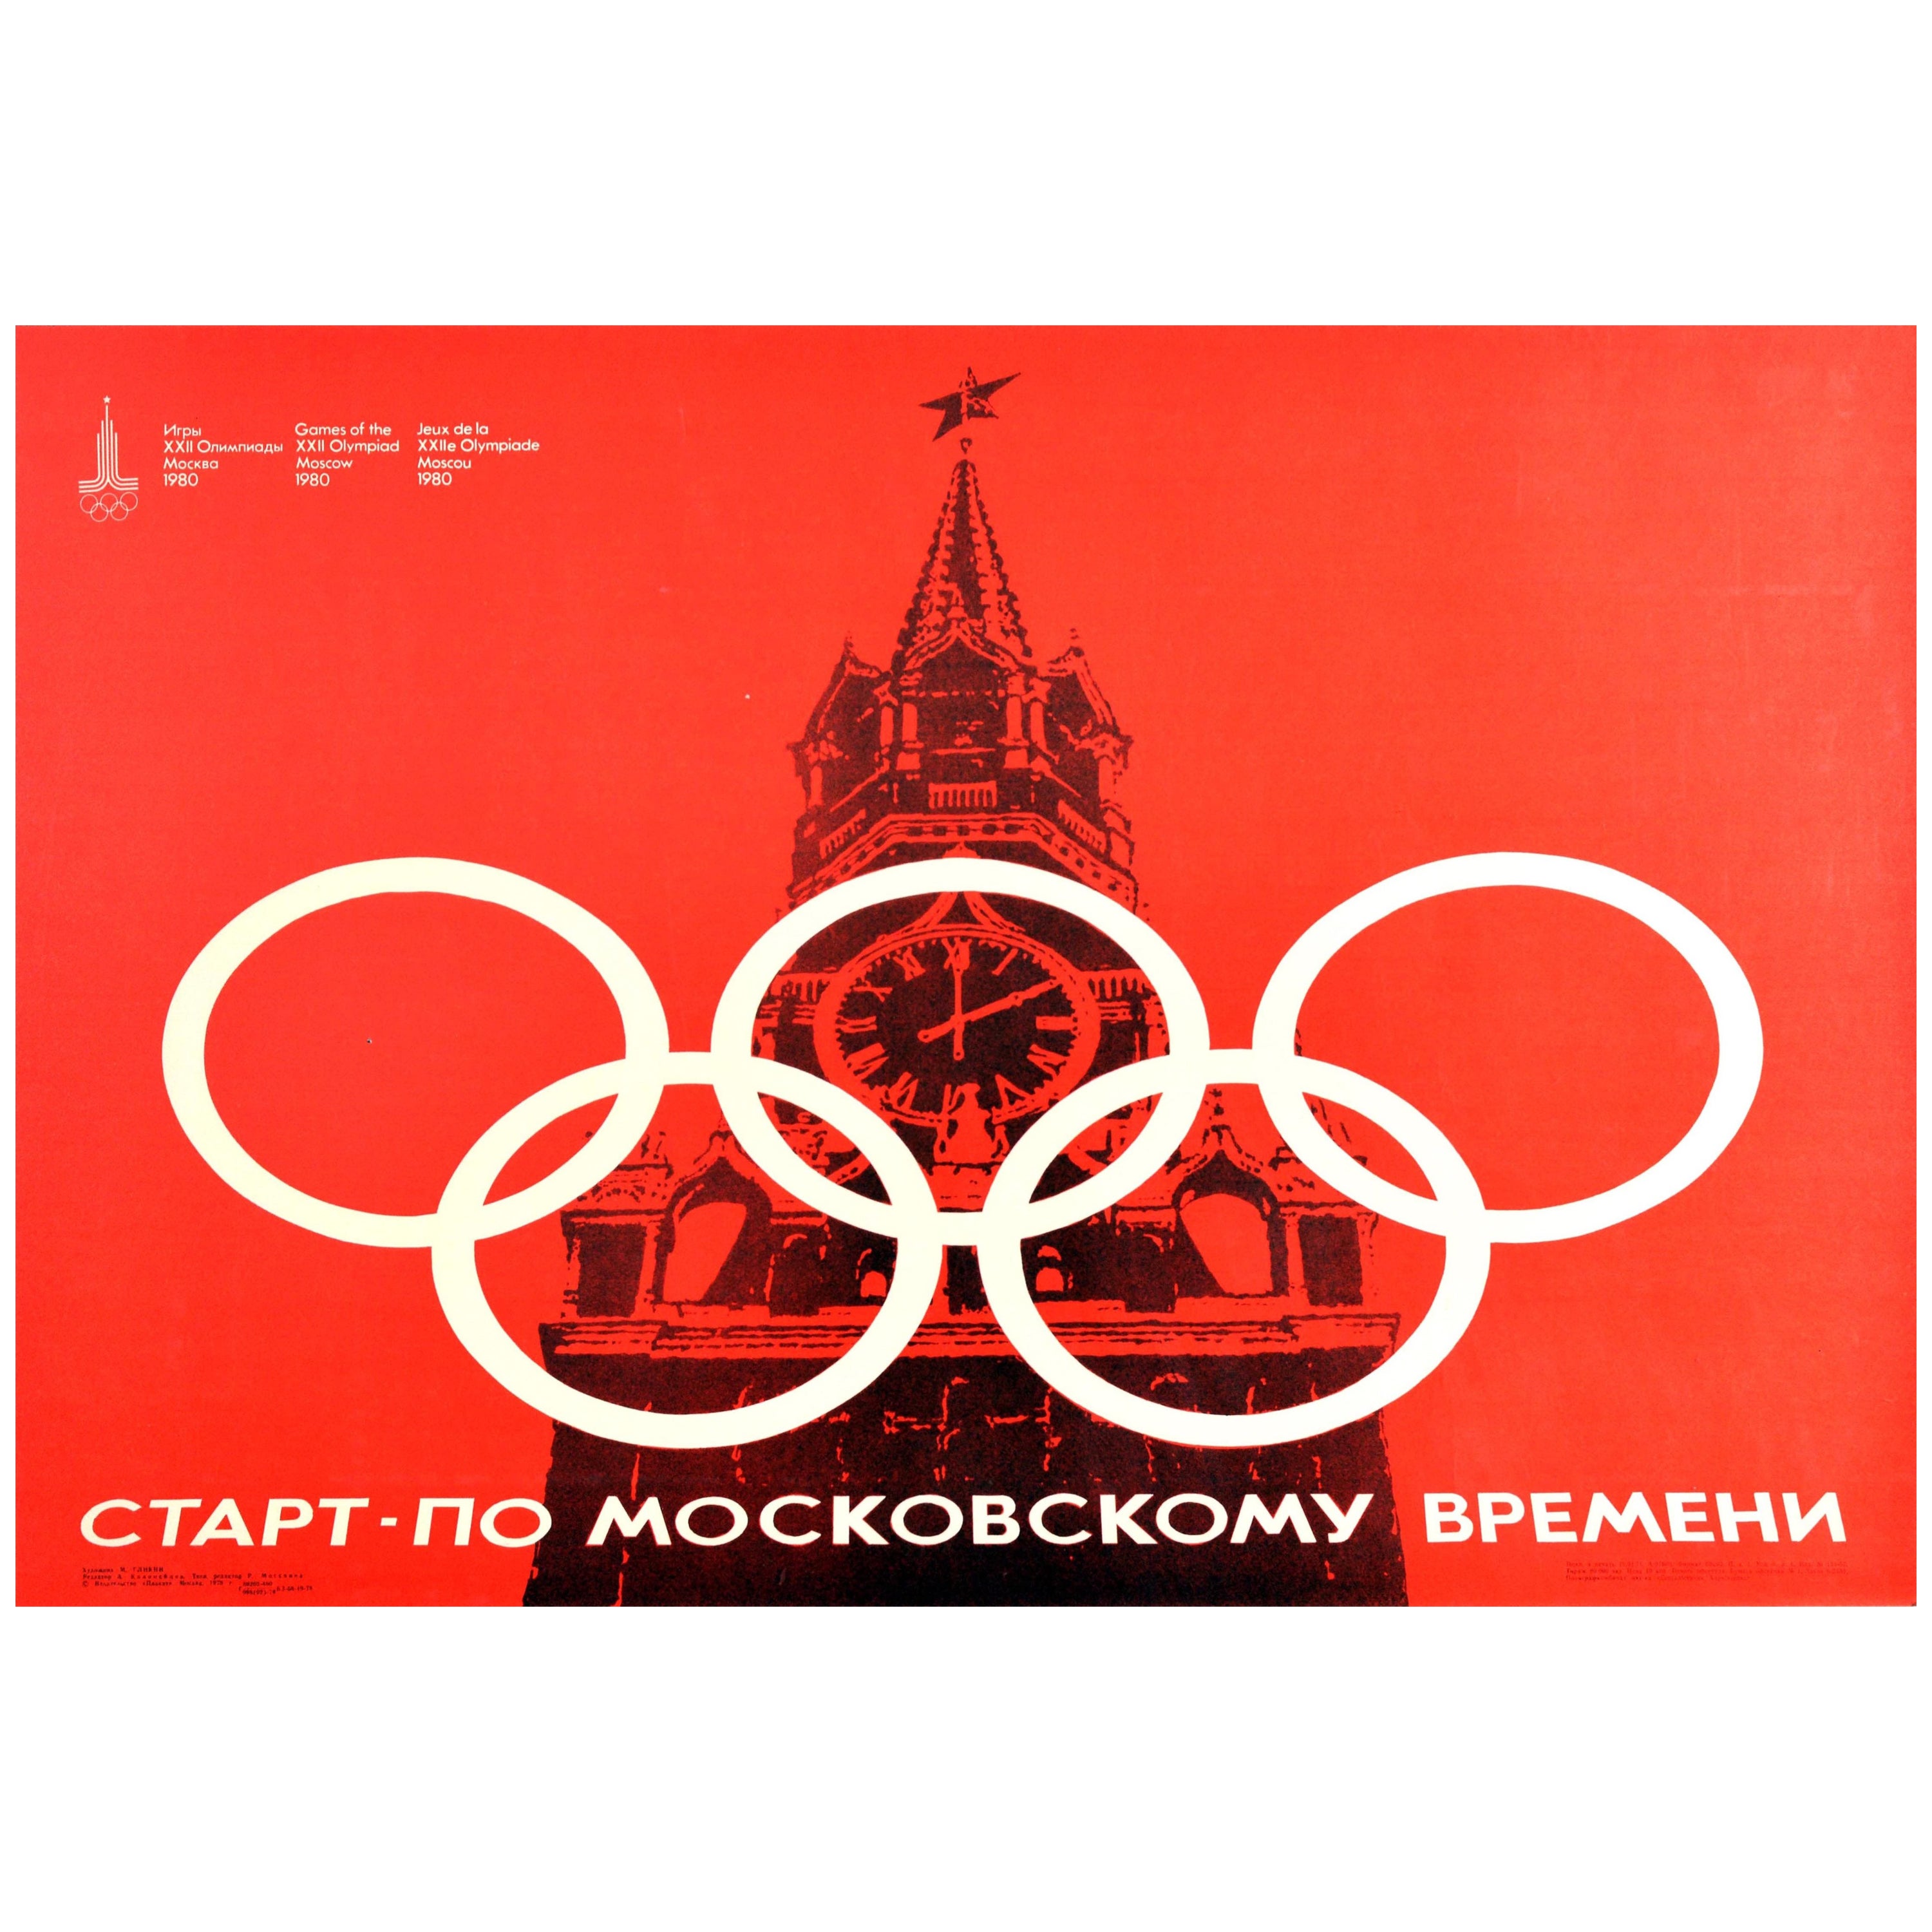 Original Vintage Poster 1980 Olympic Games Start On Moscow Time Kremlin Clock For Sale